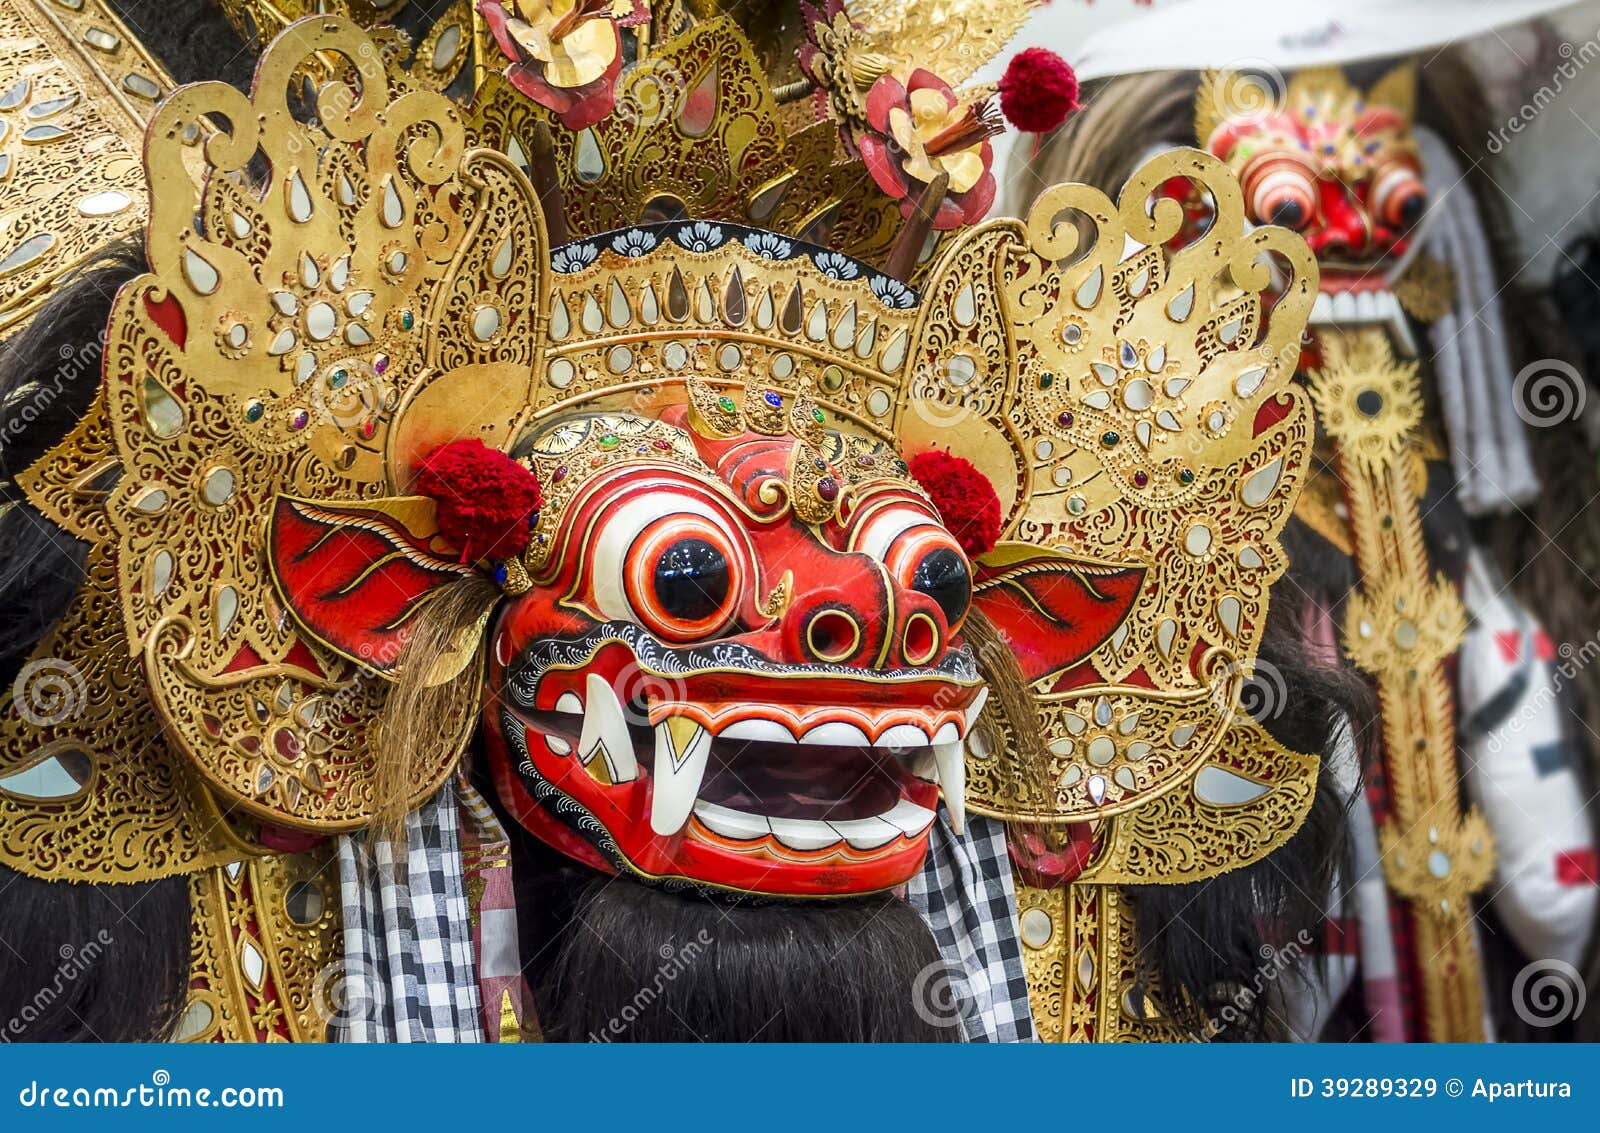 Barong Mask stock image. Image of tourism, dancing, indonesia - 39289329